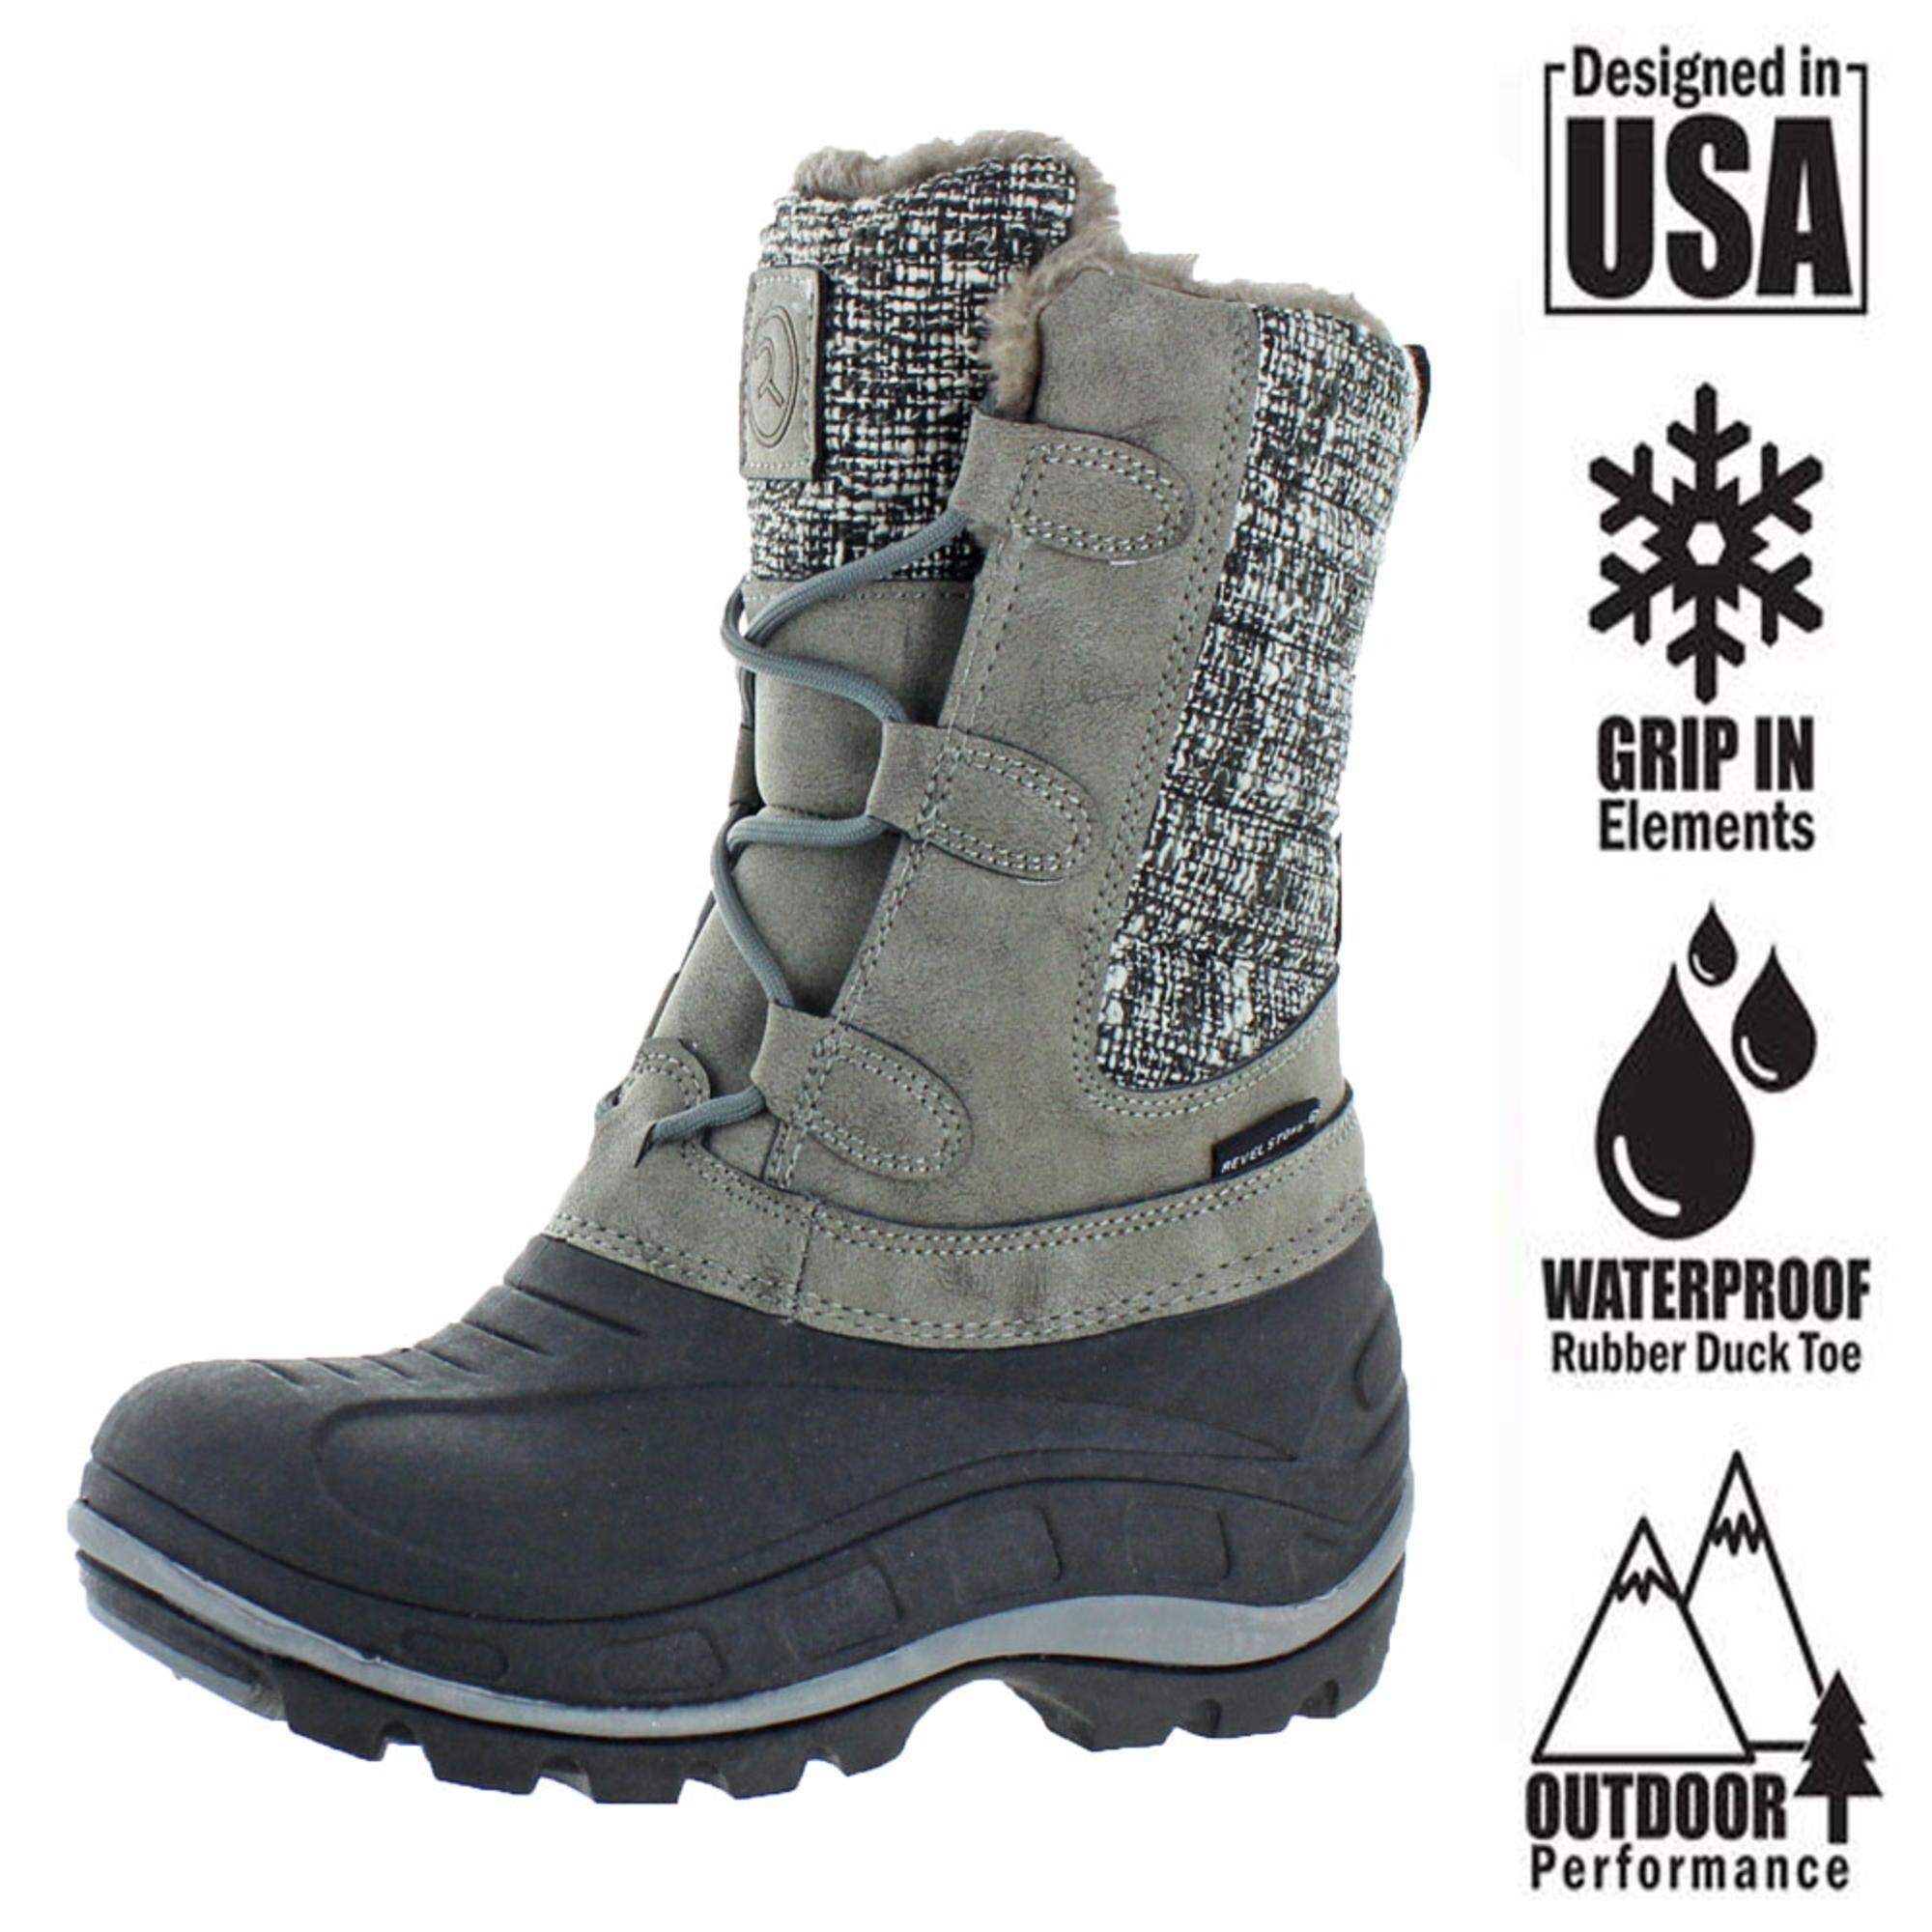 womens steel toe snow boots